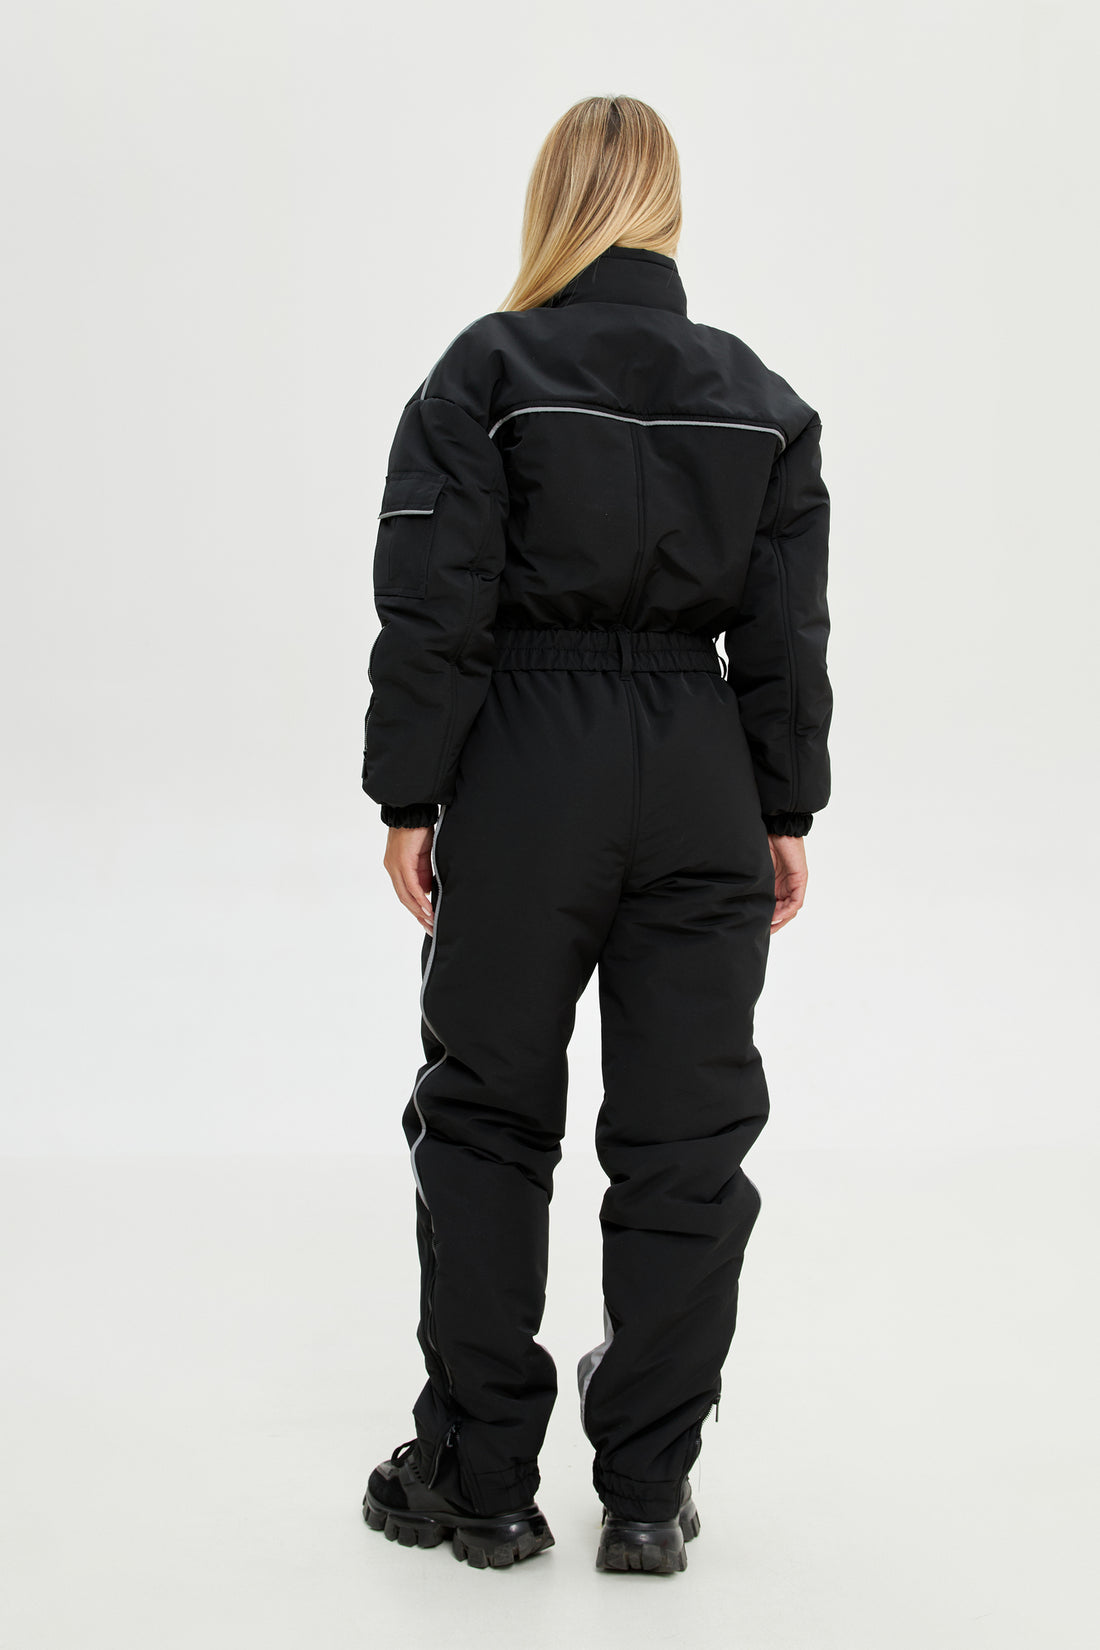 Black ski suit BLANC - BLACK with reflective edging - Ski clothes ladies for ski trip outfit